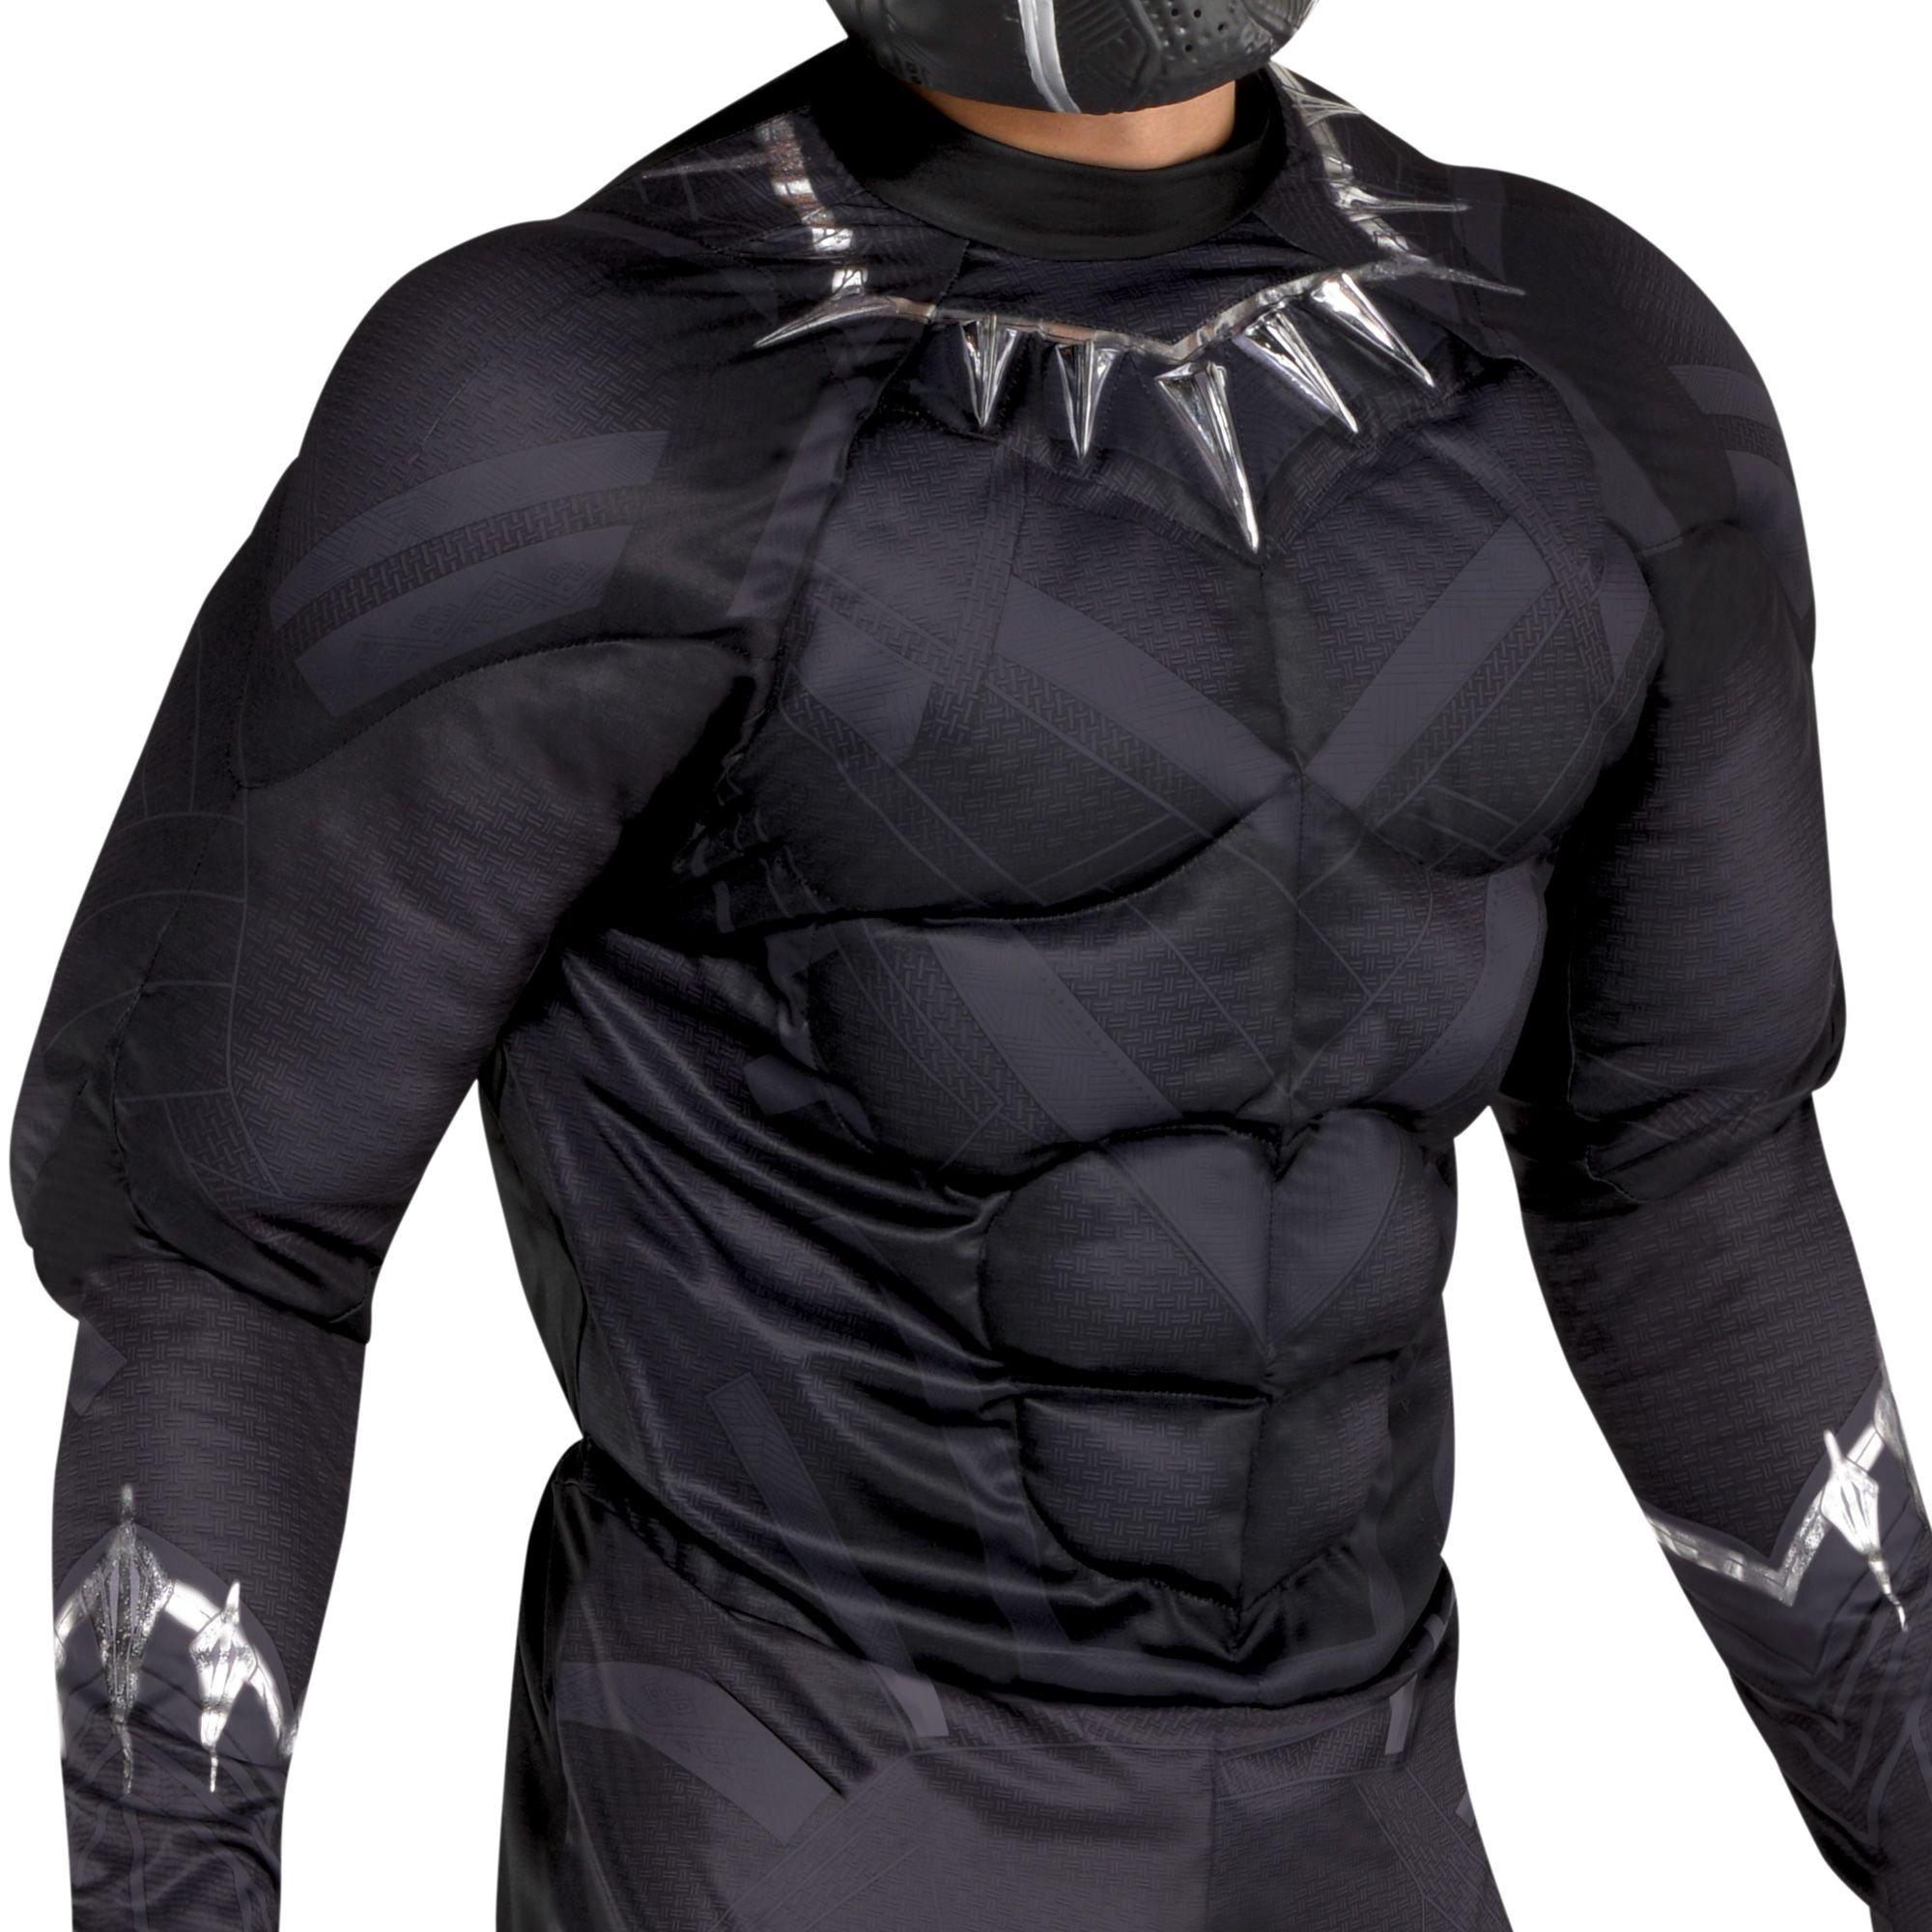 Black Panther Costume Ideas